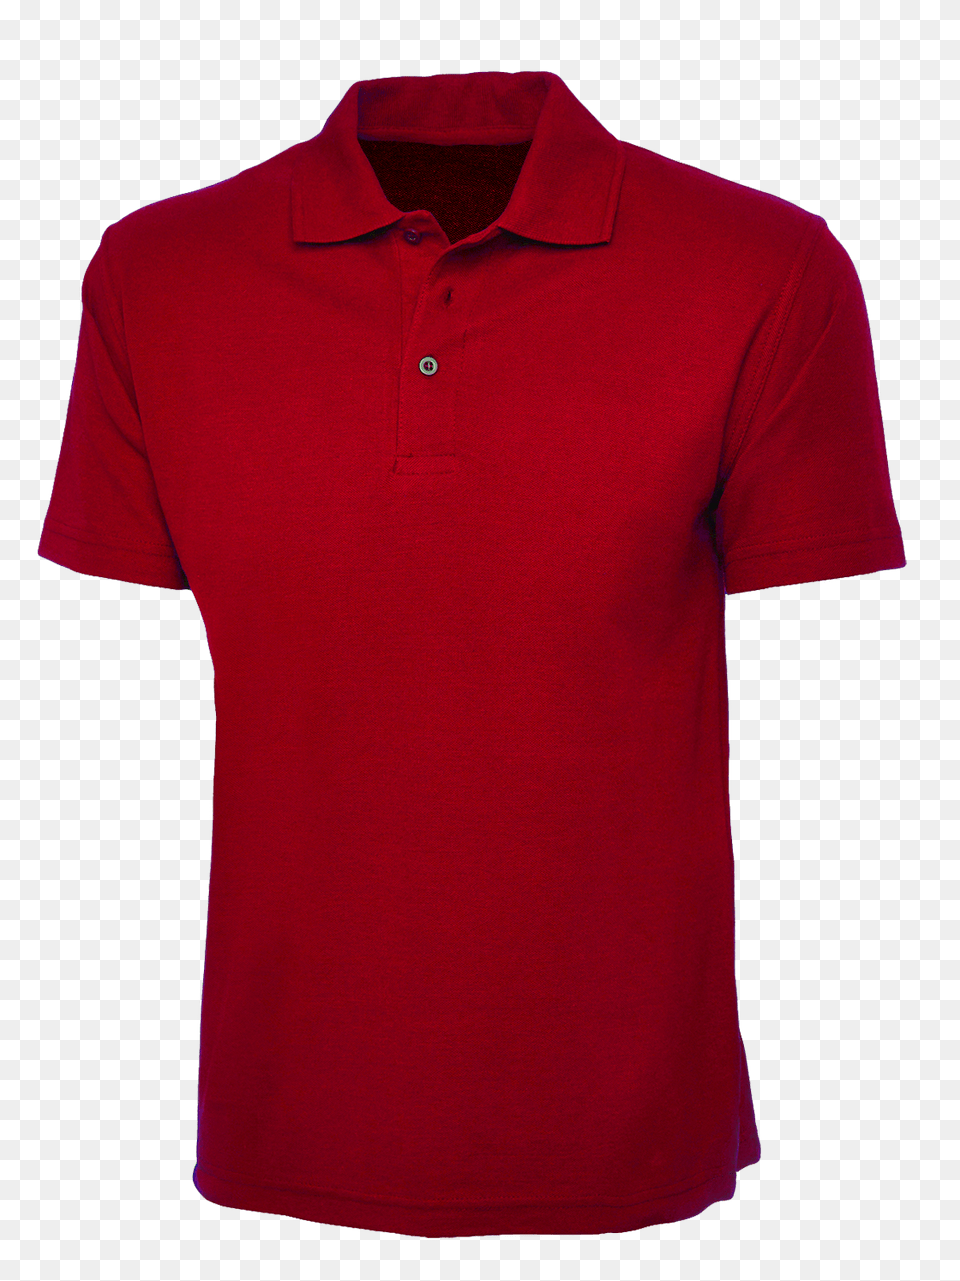 Plain Red Polo Shirt Cutton Garments, Clothing, T-shirt, Maroon Free Transparent Png